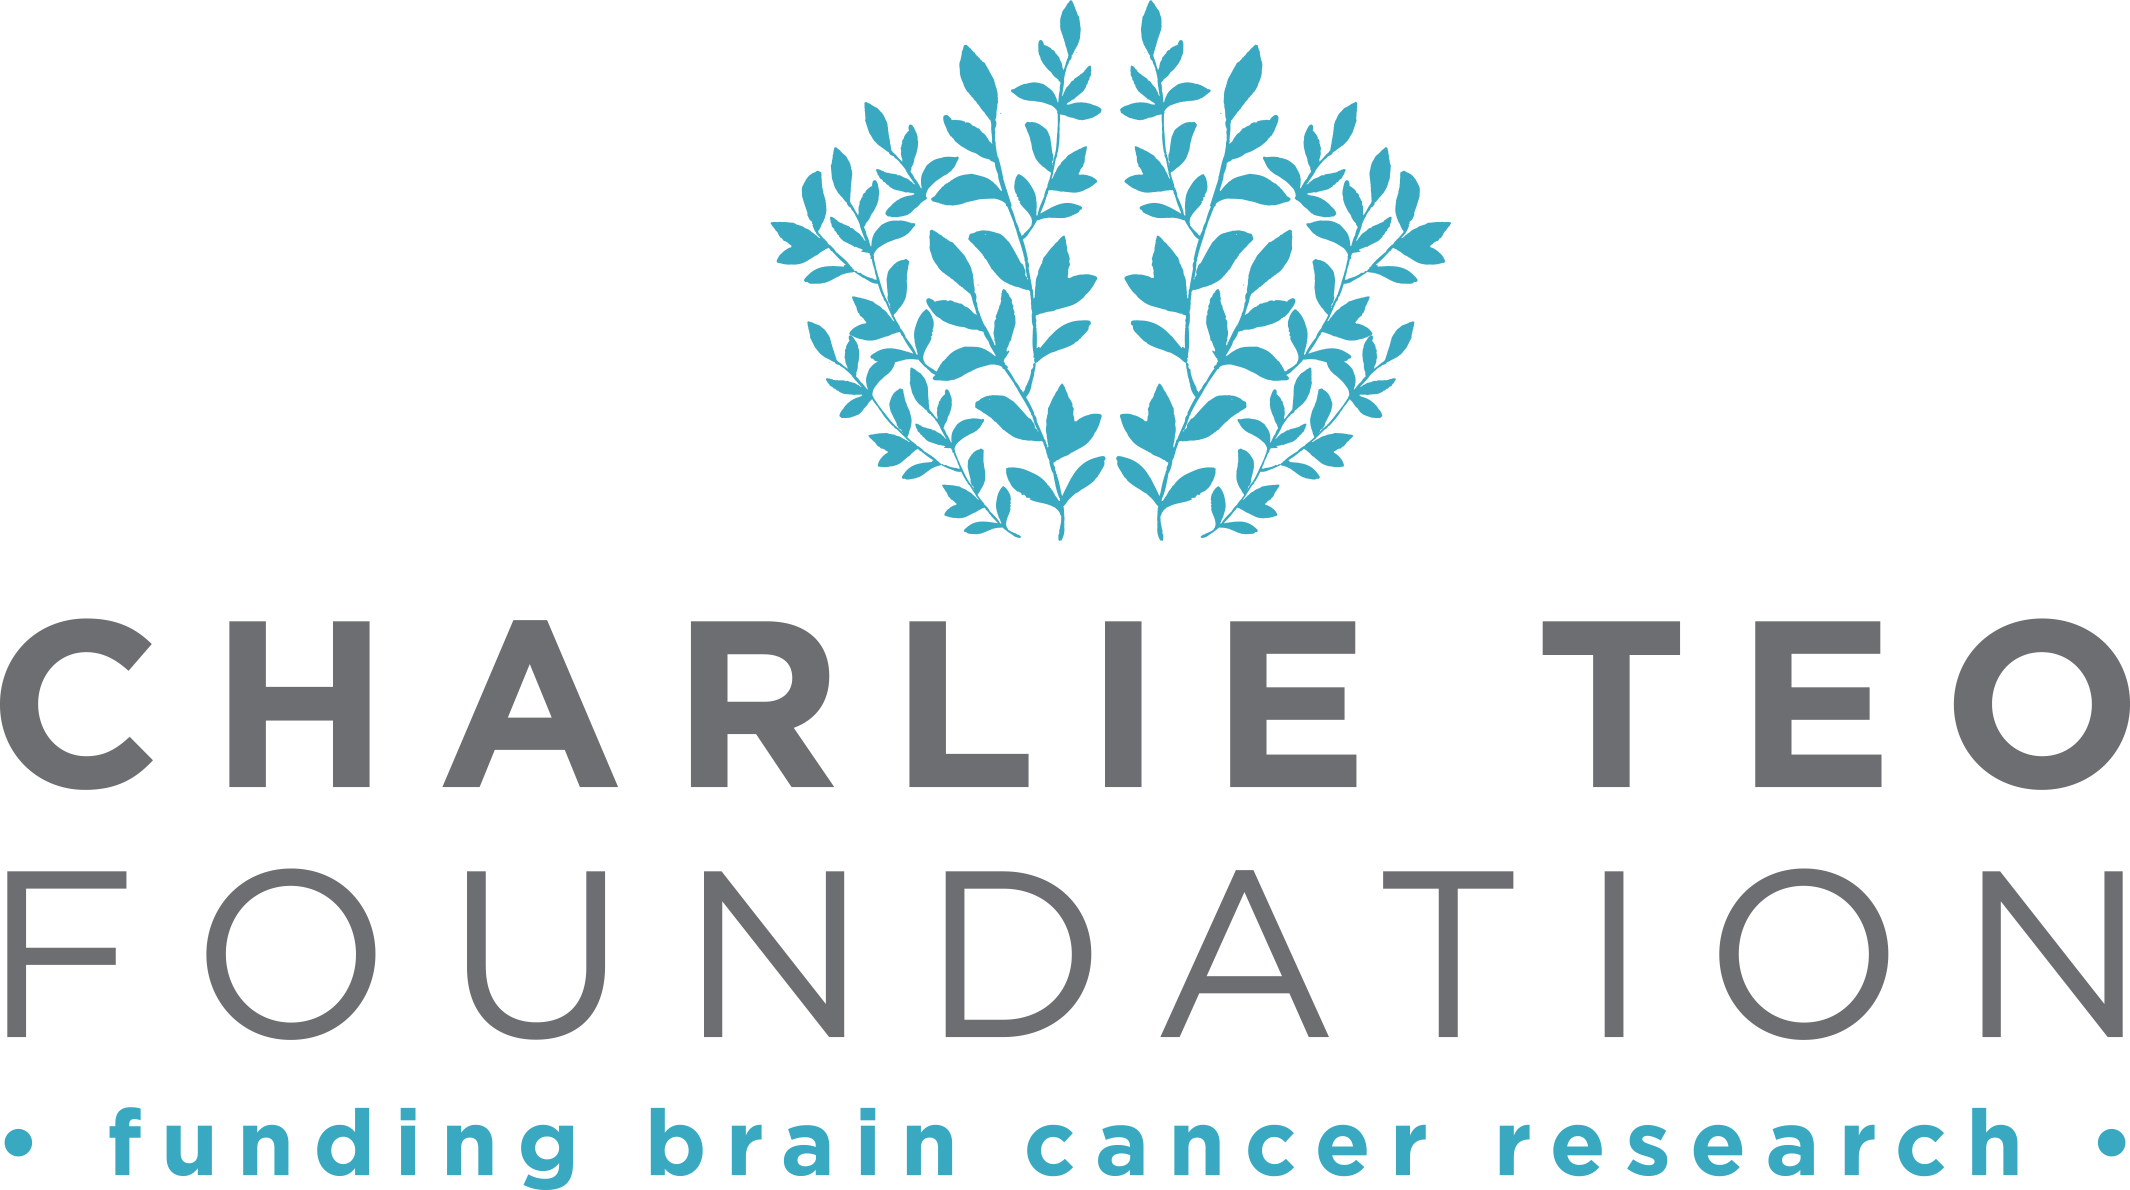 Charlie Teo Foundation